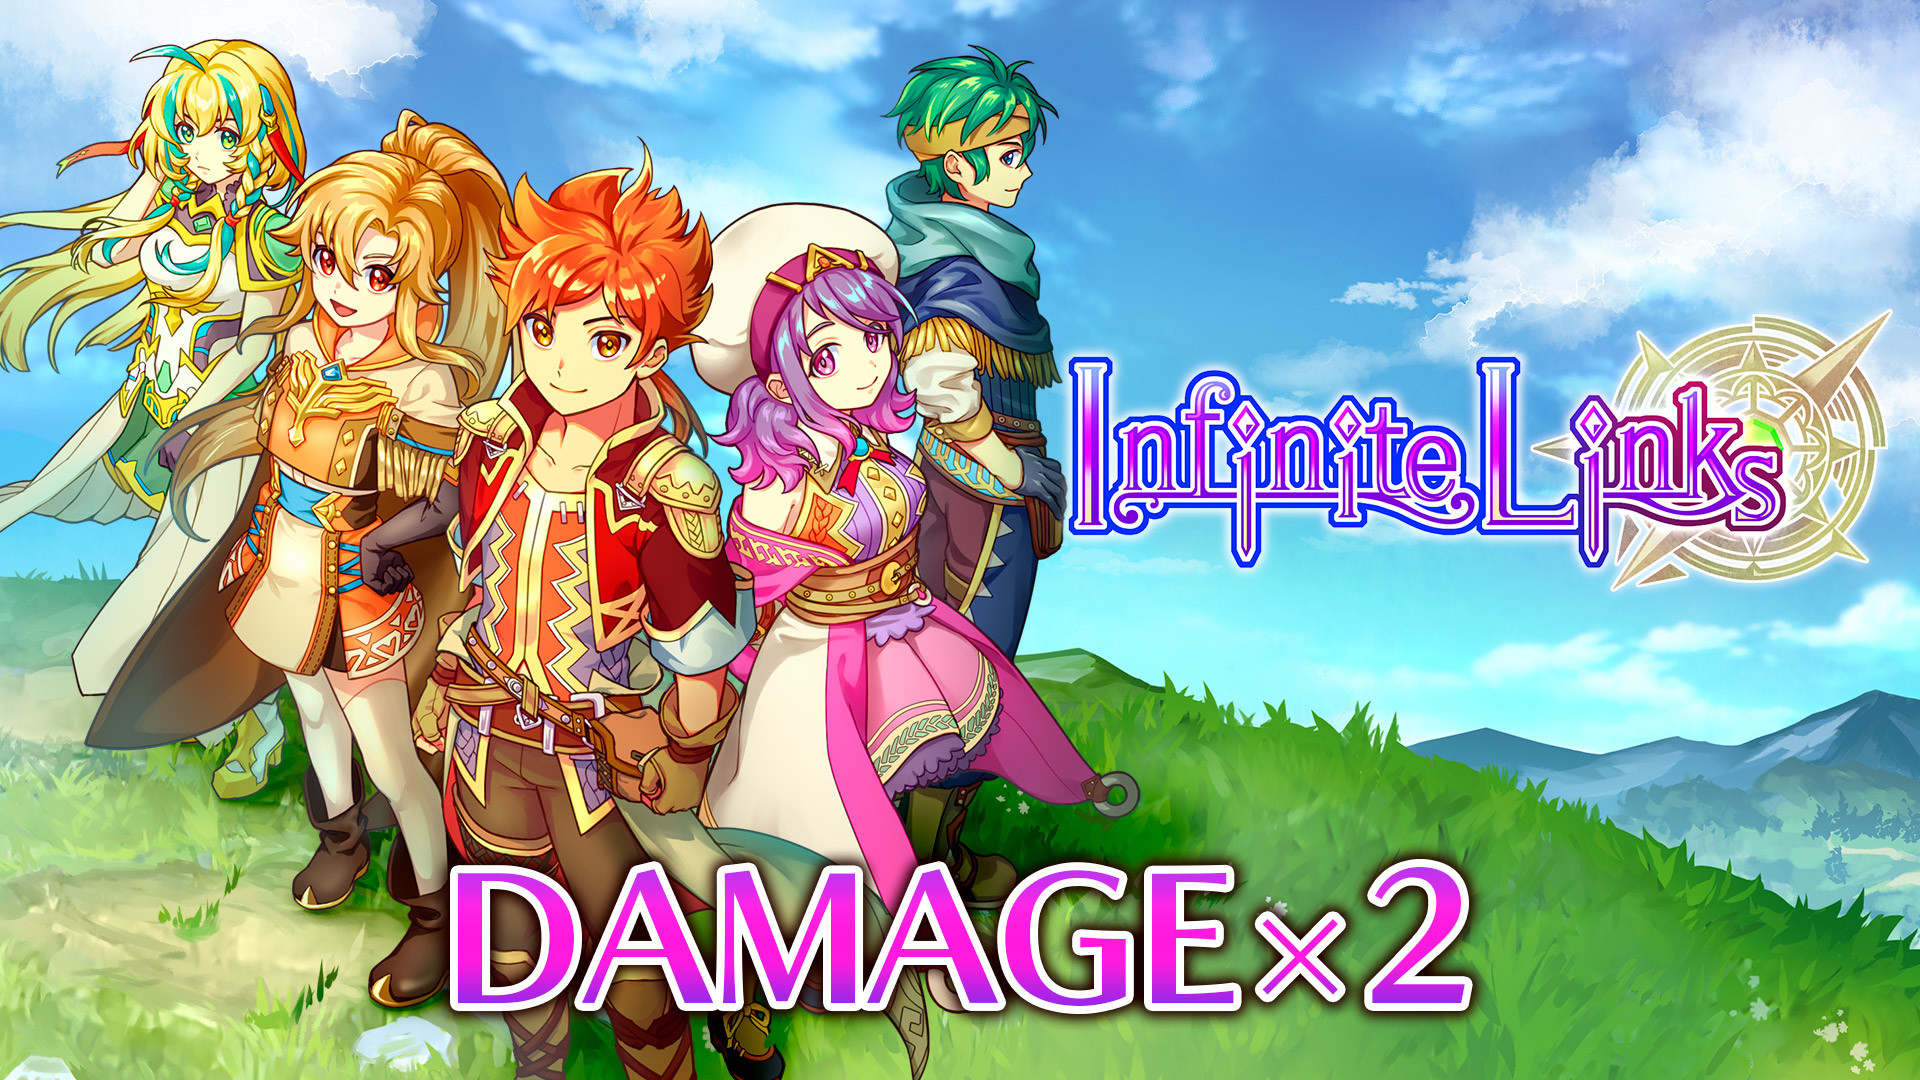 Damage x2 - Infinite Links Featured Screenshot #1